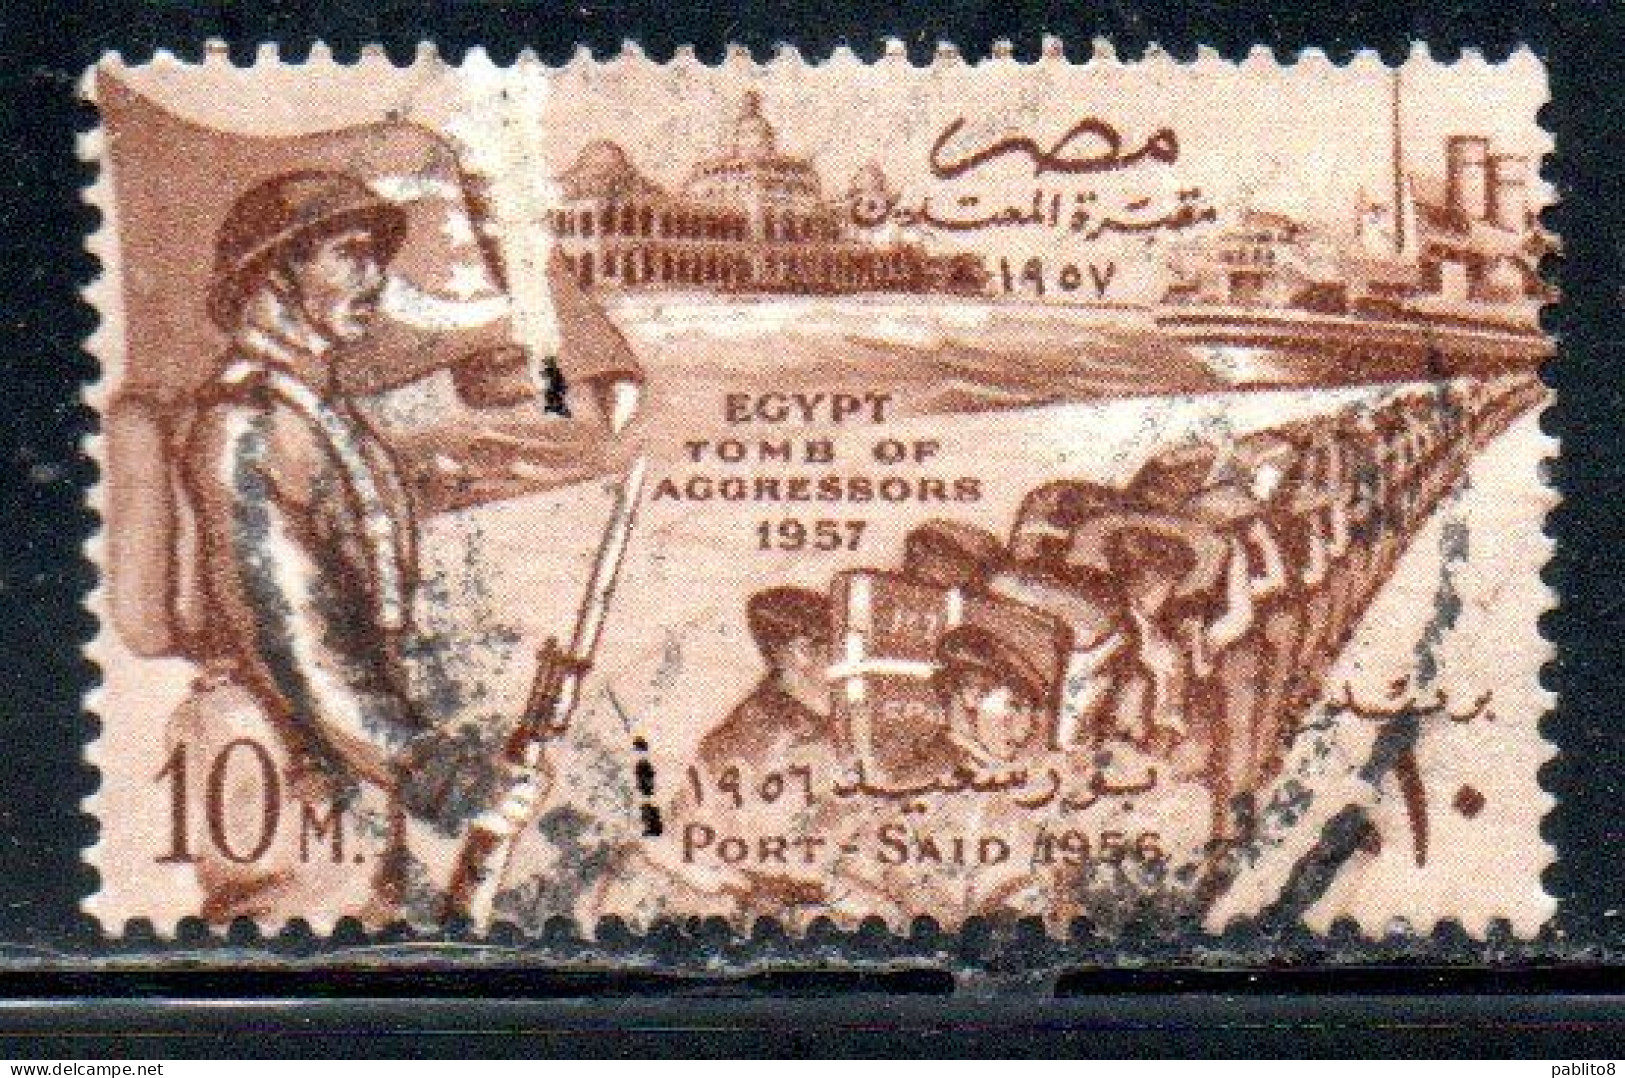 UAR EGYPT EGITTO 1957 TOMB OF AGGRESSORS 1957 PORT SAID 1956 10m USED USATO OBLITERE' - Used Stamps